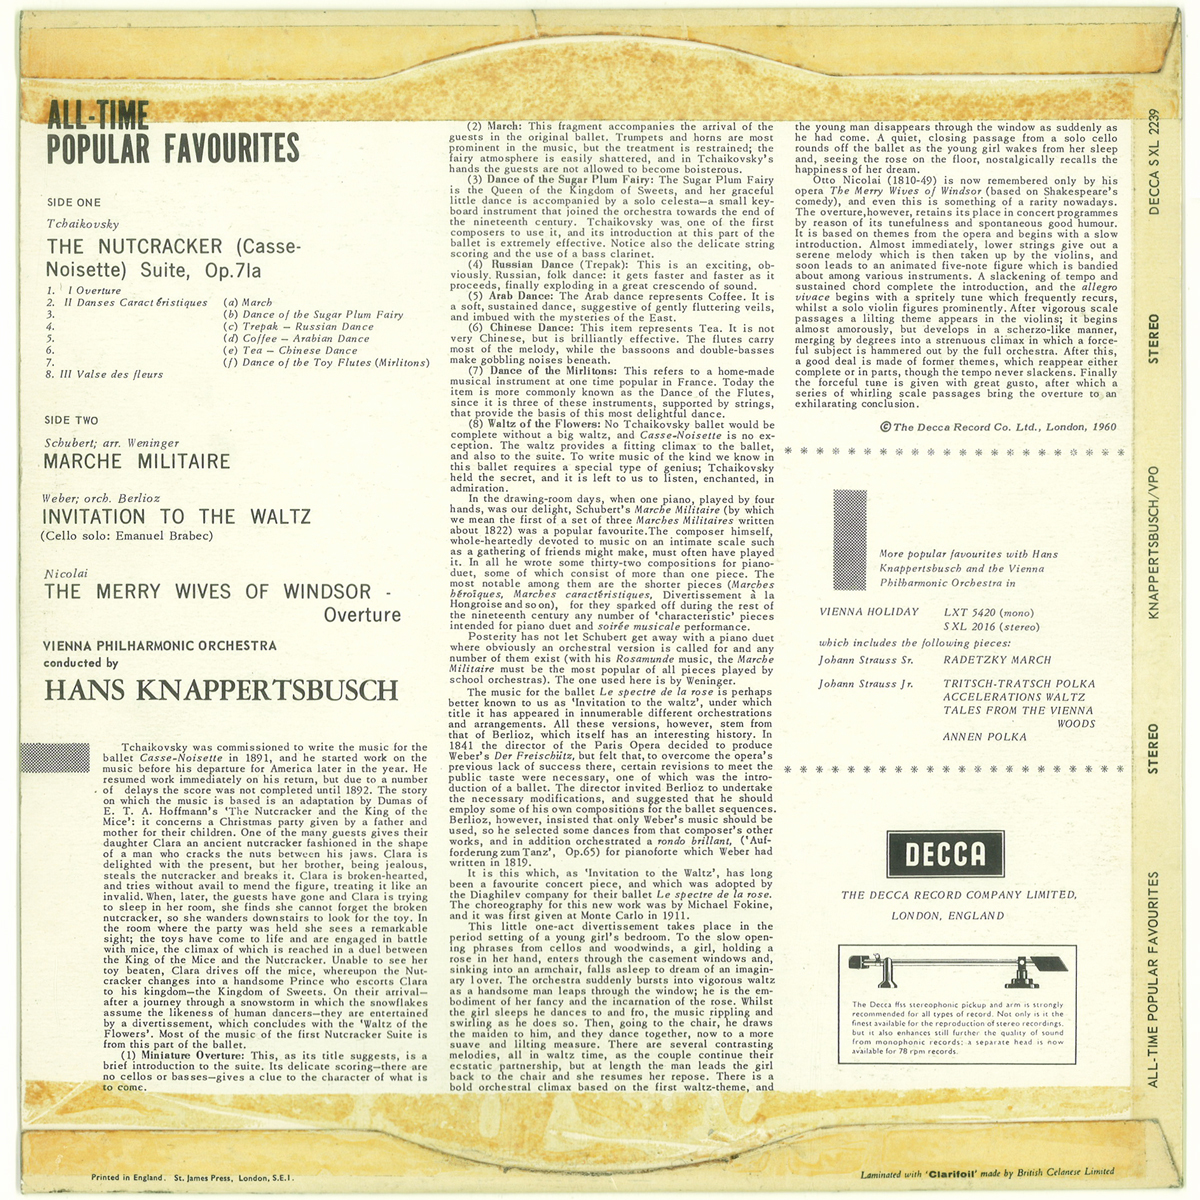  britain Decca SXL2239 ED3 [ALL-TIME POPULAR FAVOURITES]kna parts bush we n* Phil 